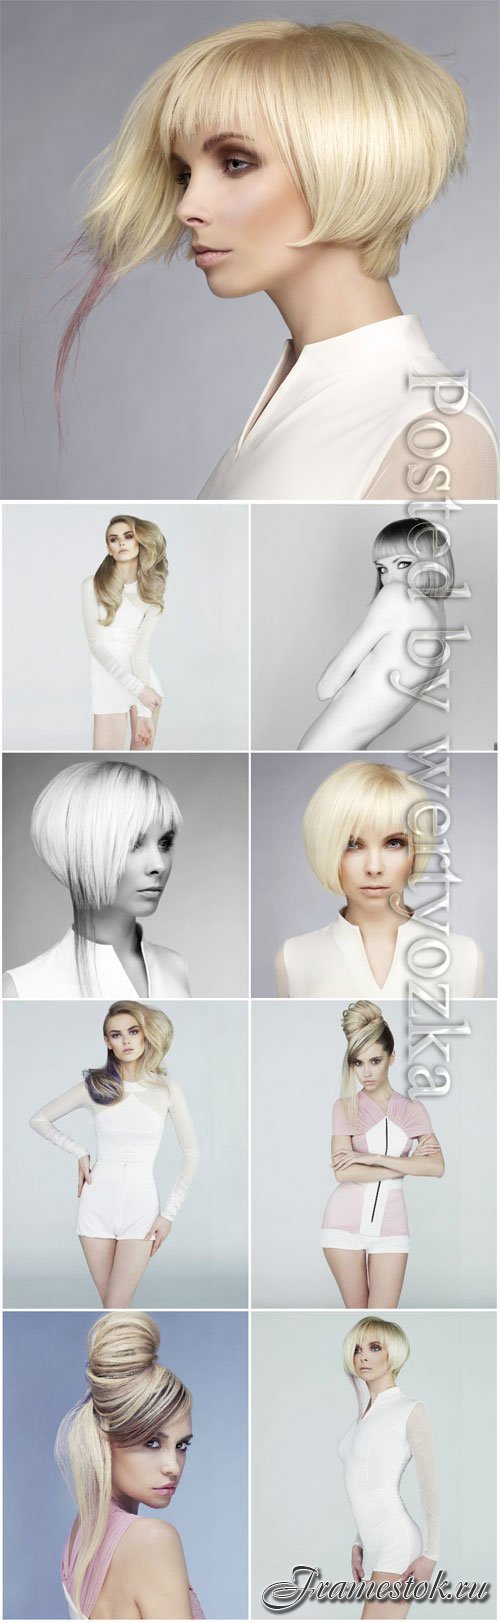 Stylish hairstyles for fashionable girls stock photo